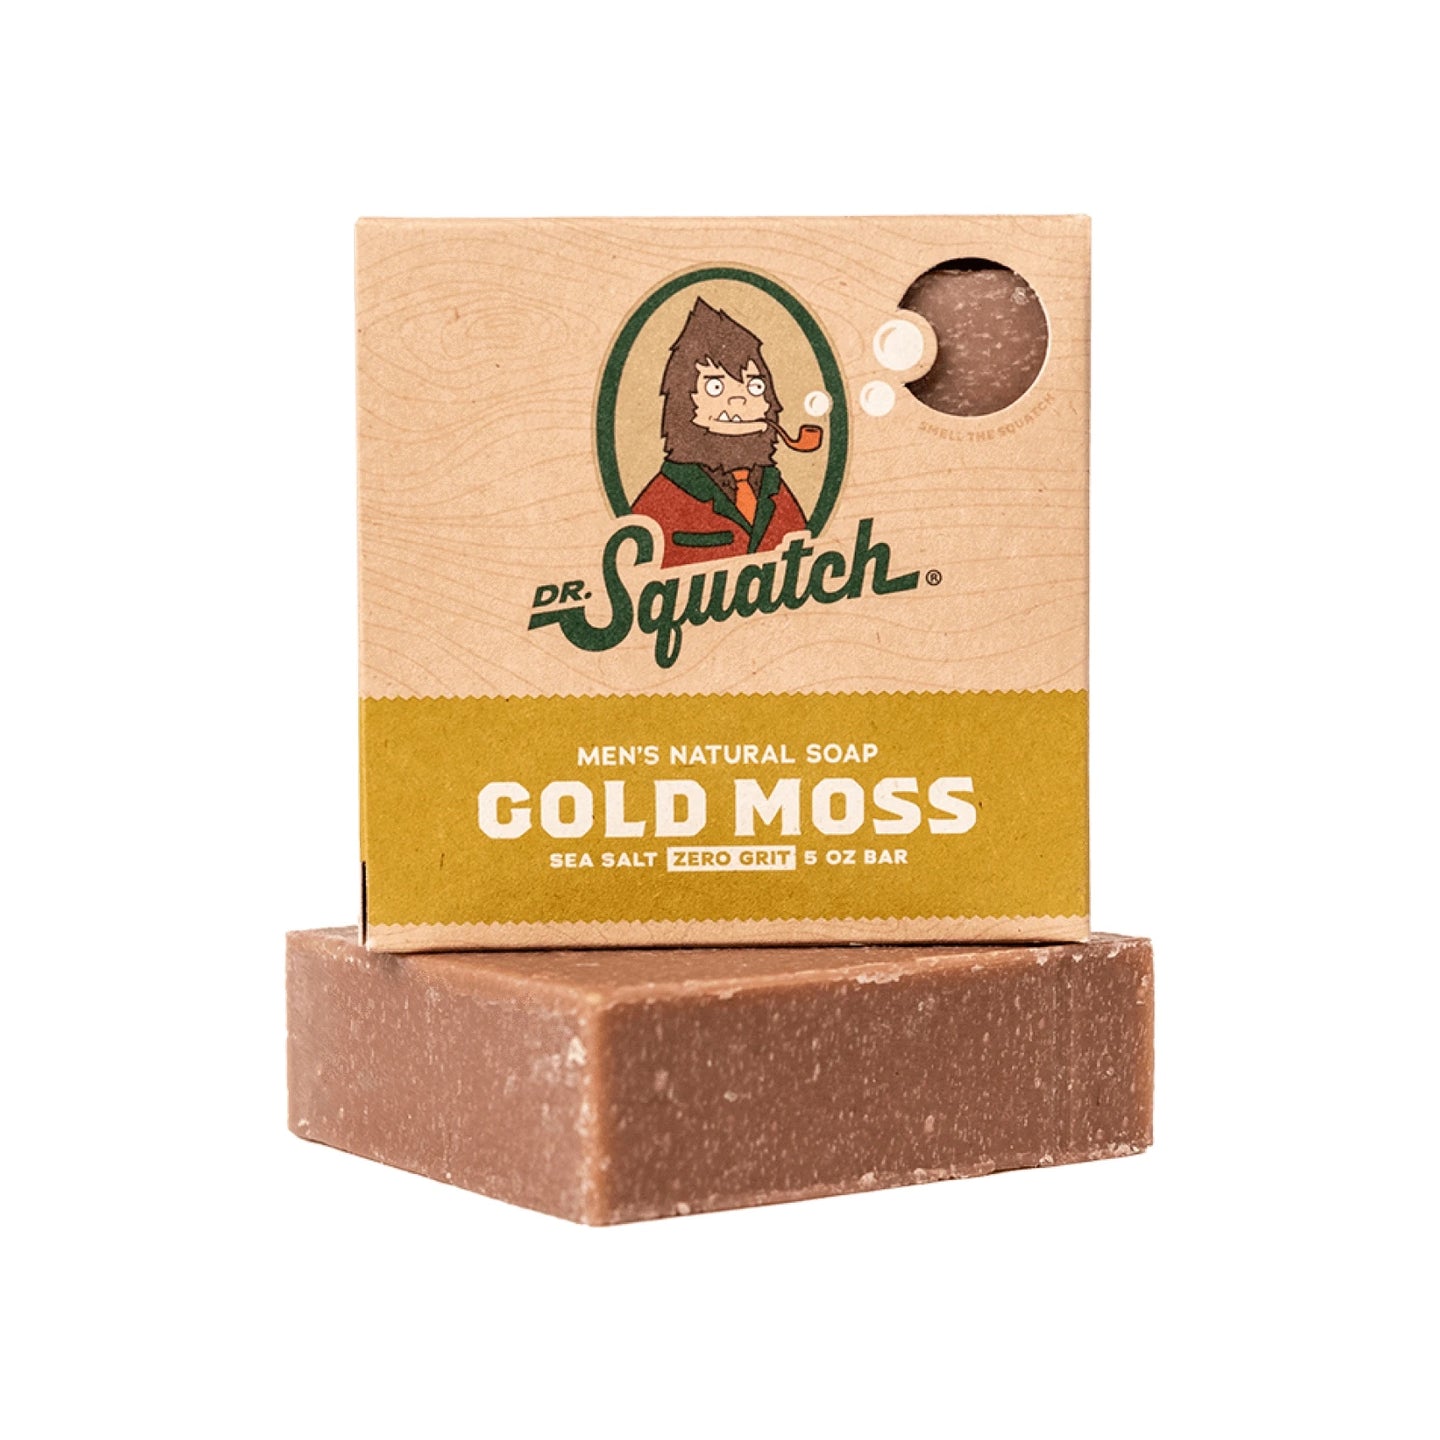 Dr. Squatch Bar Soap, Gold Moss